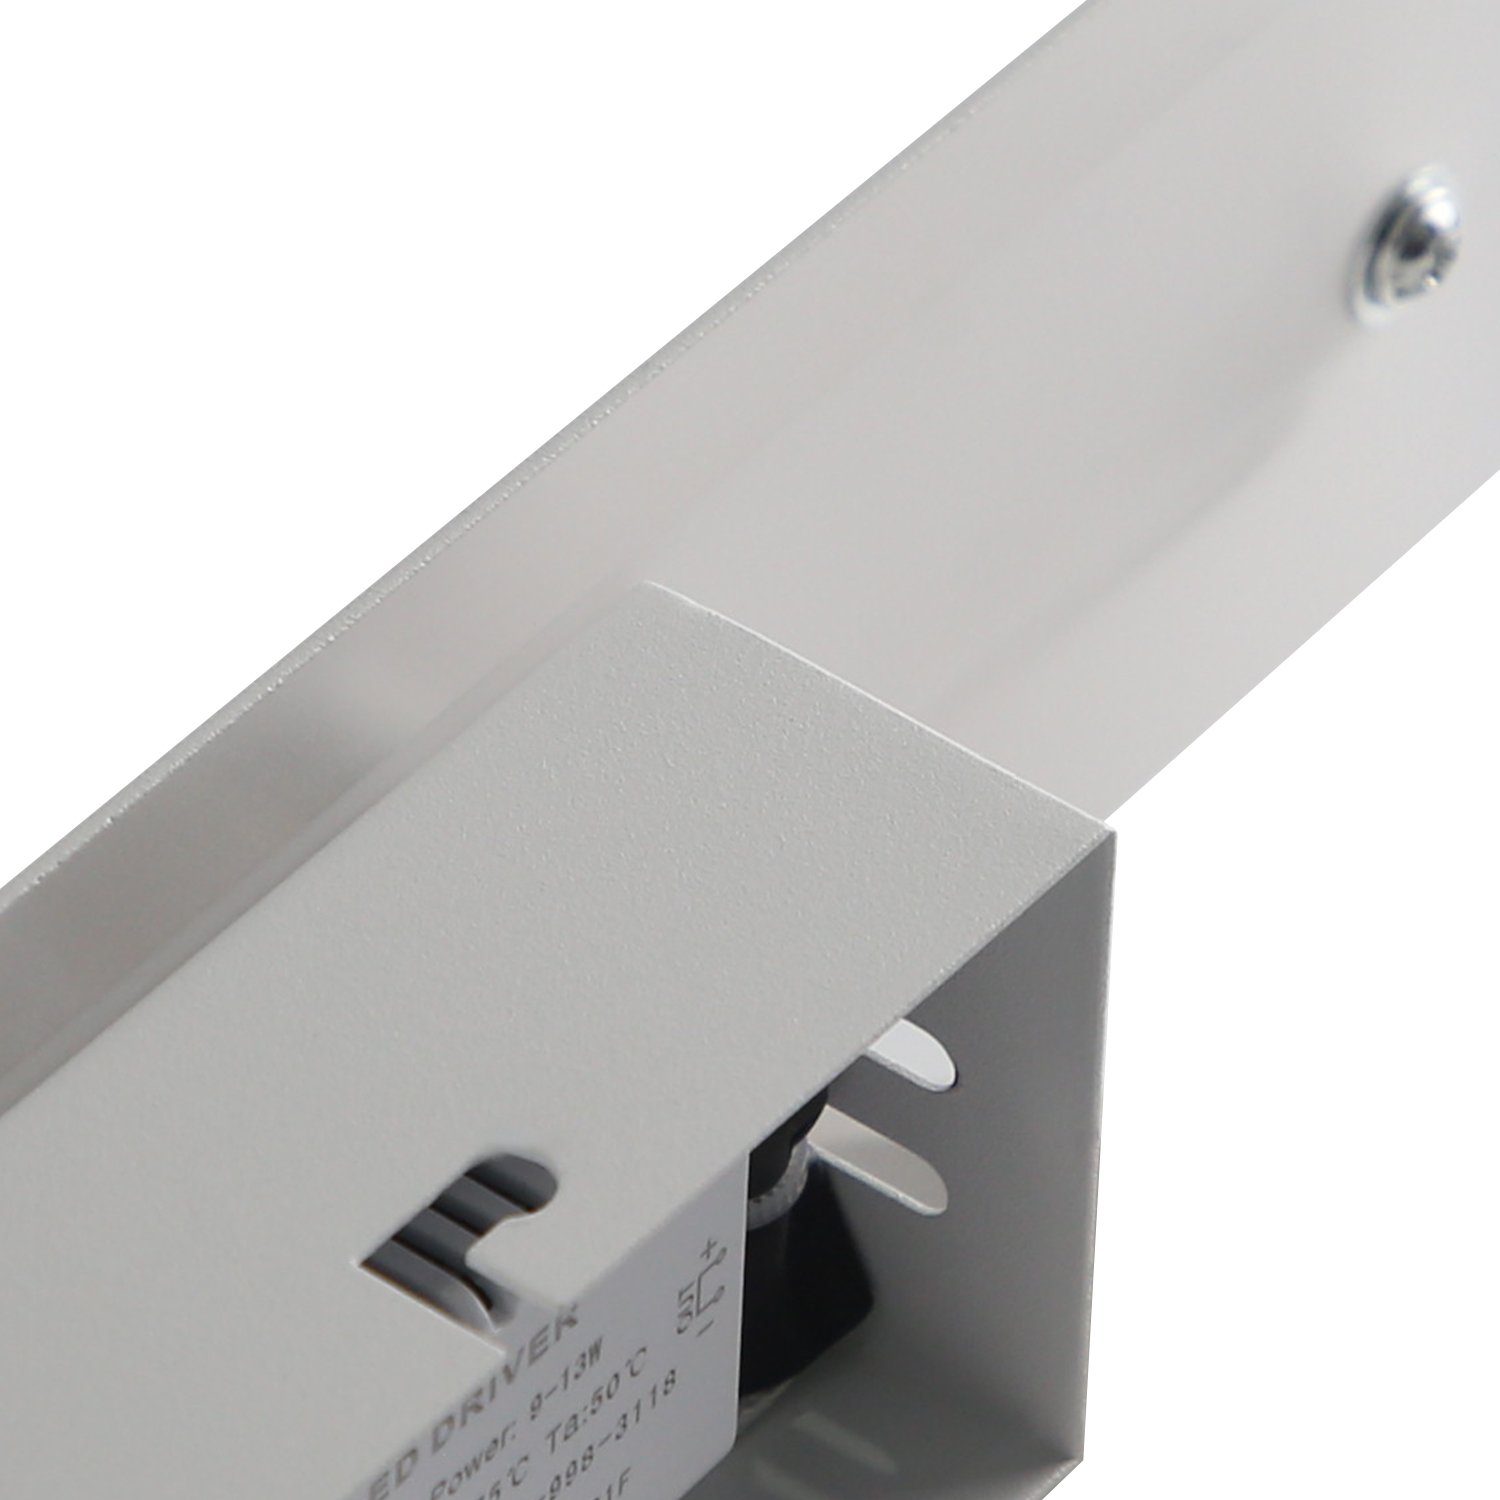 ZMH LED 30cm integriert, 60cm 100cm, Weiß warmweiß, fest weiß/schwarz innen LED 30cm Wandlampe Wandleuchte